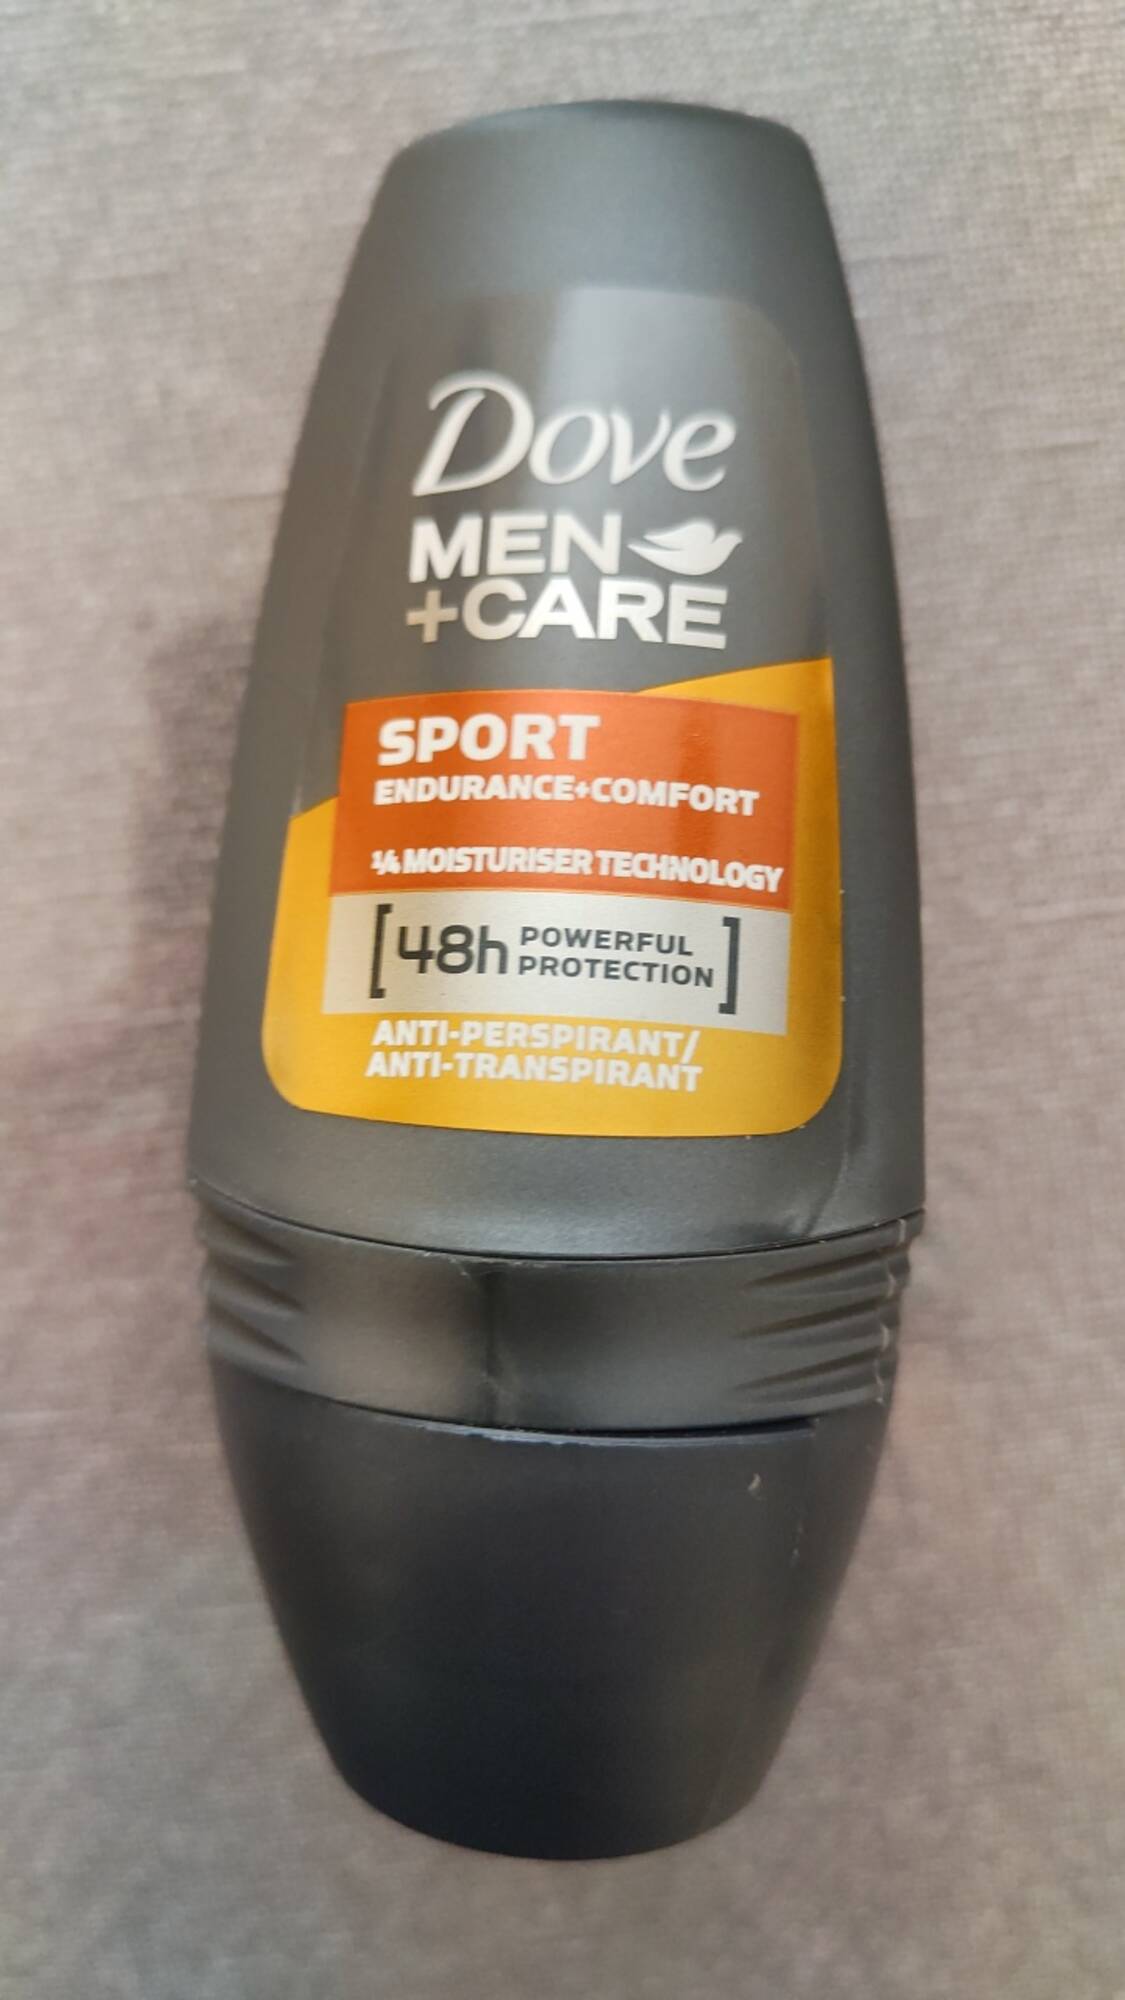 DOVE - Men+care sport - Anti-transpirant protection 48h